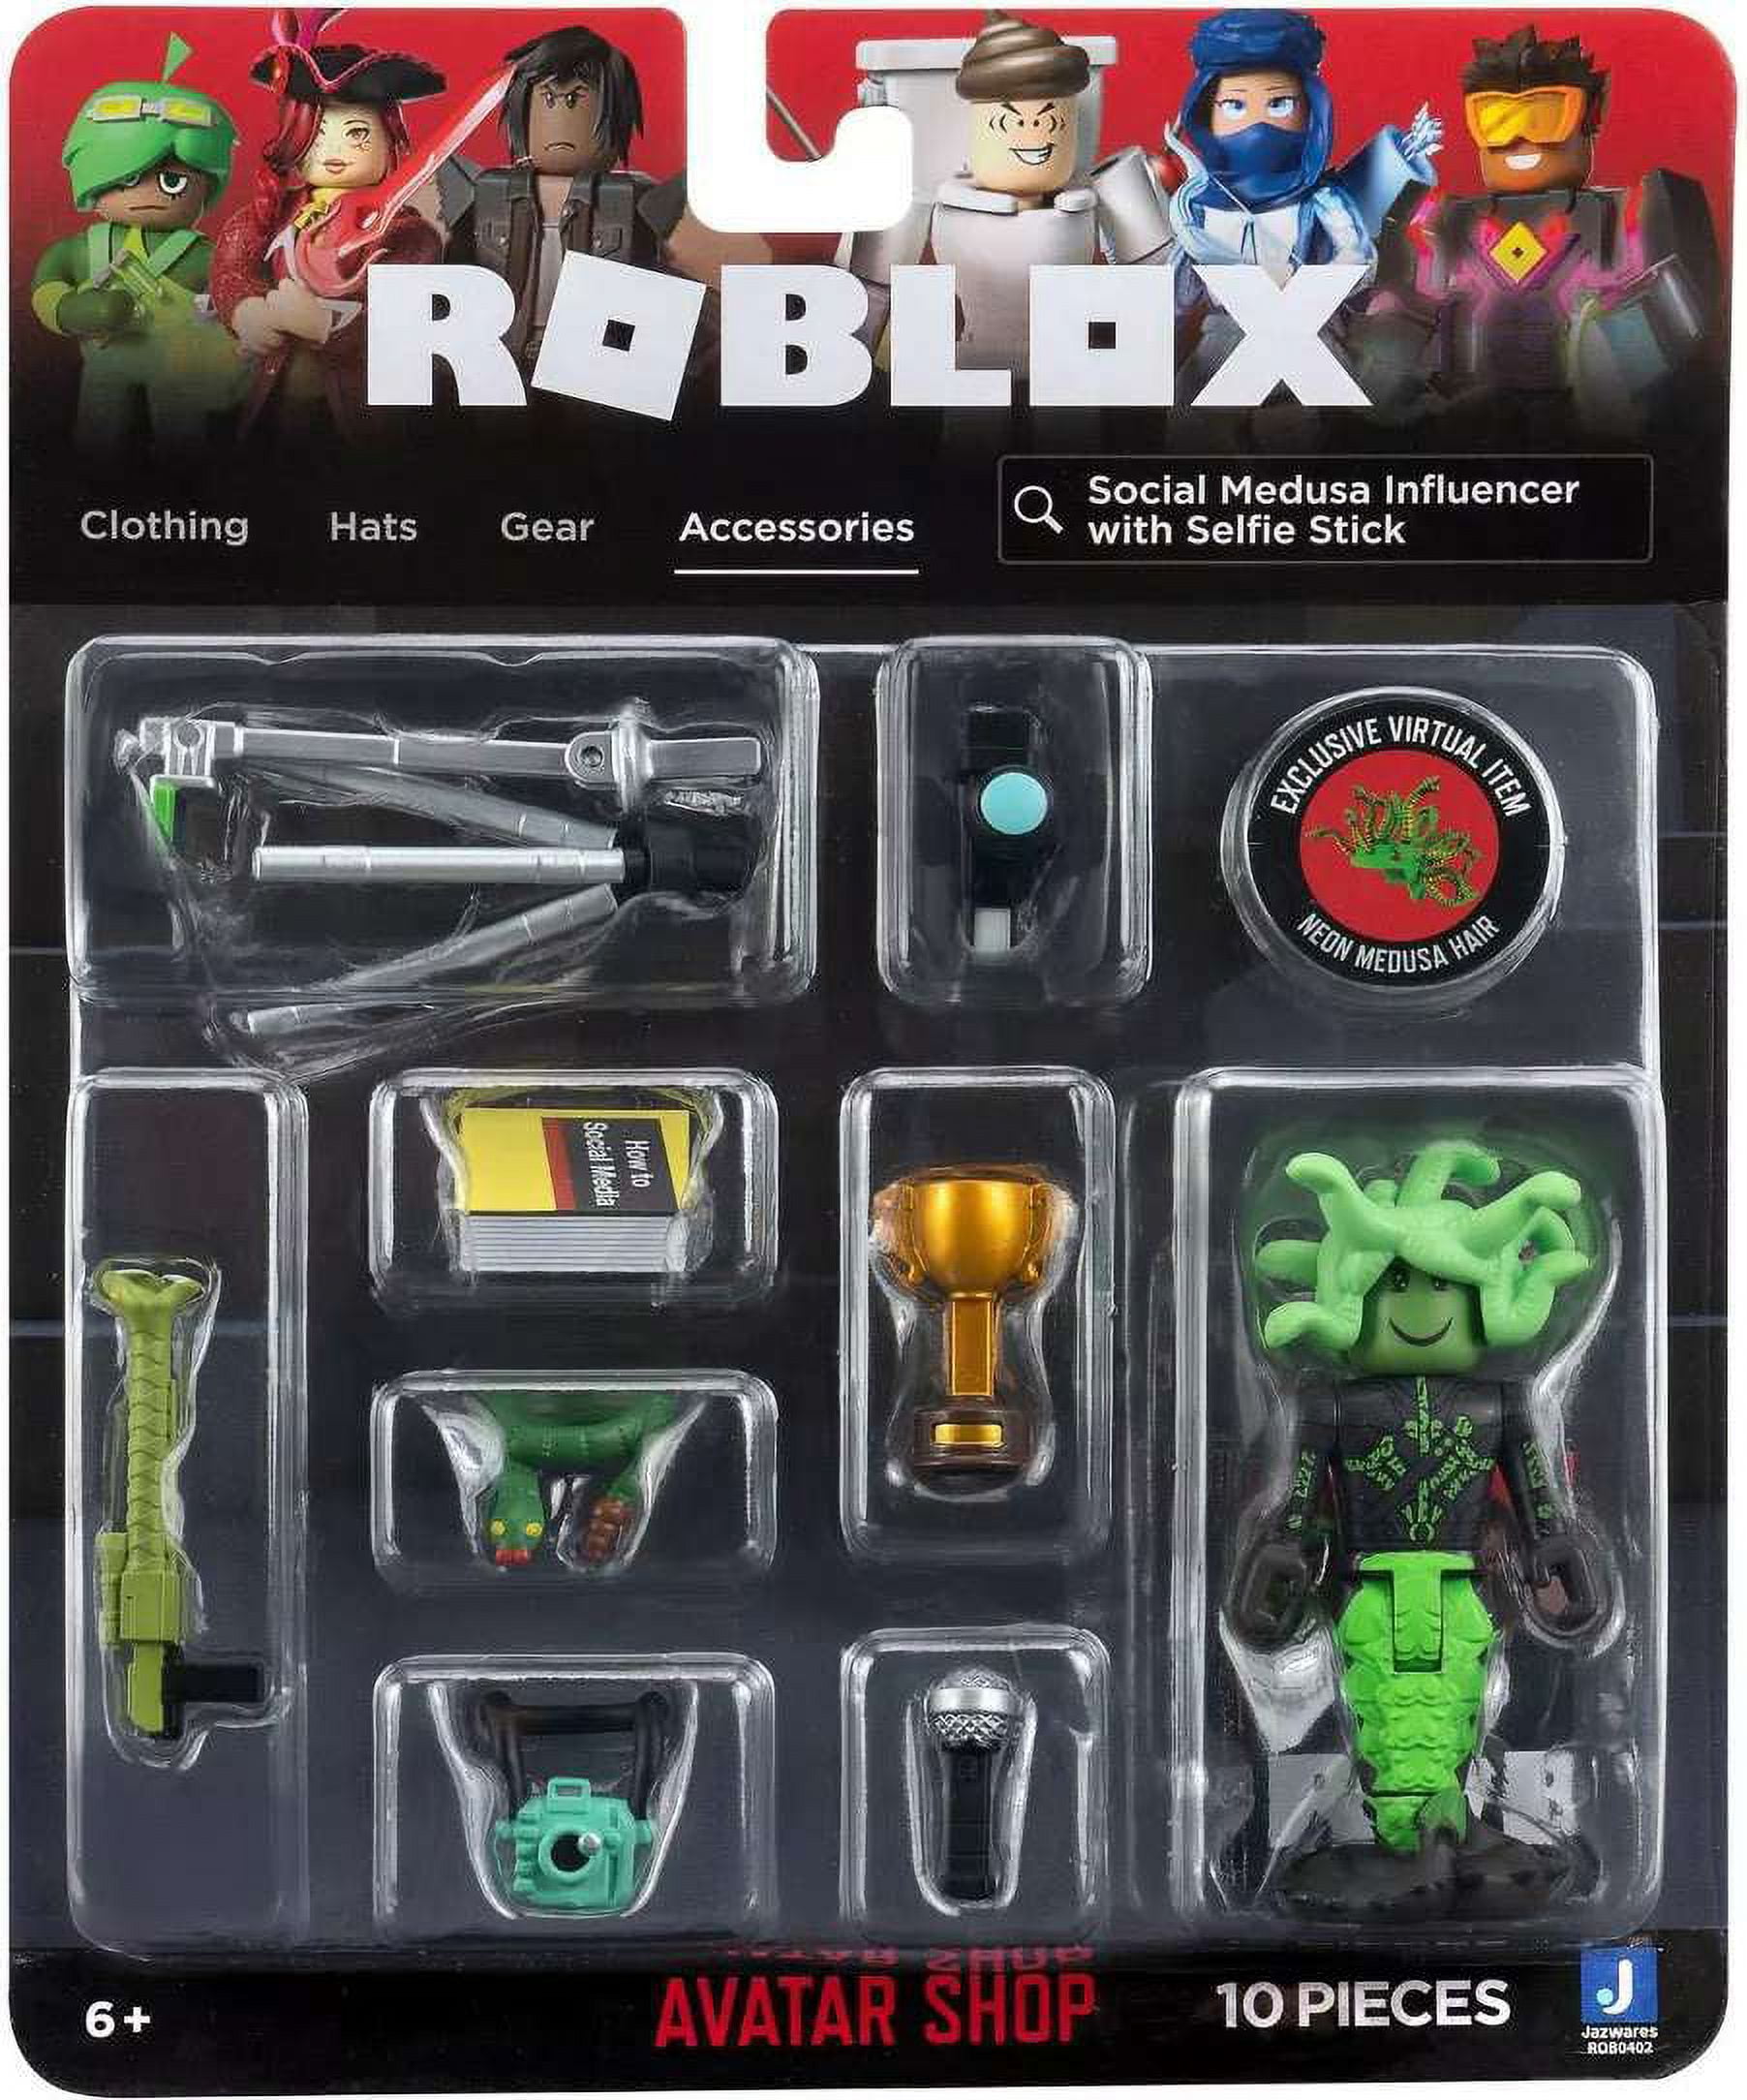 Roblox 12 Figure Pack Roblox Classics S7 (ROB0693)